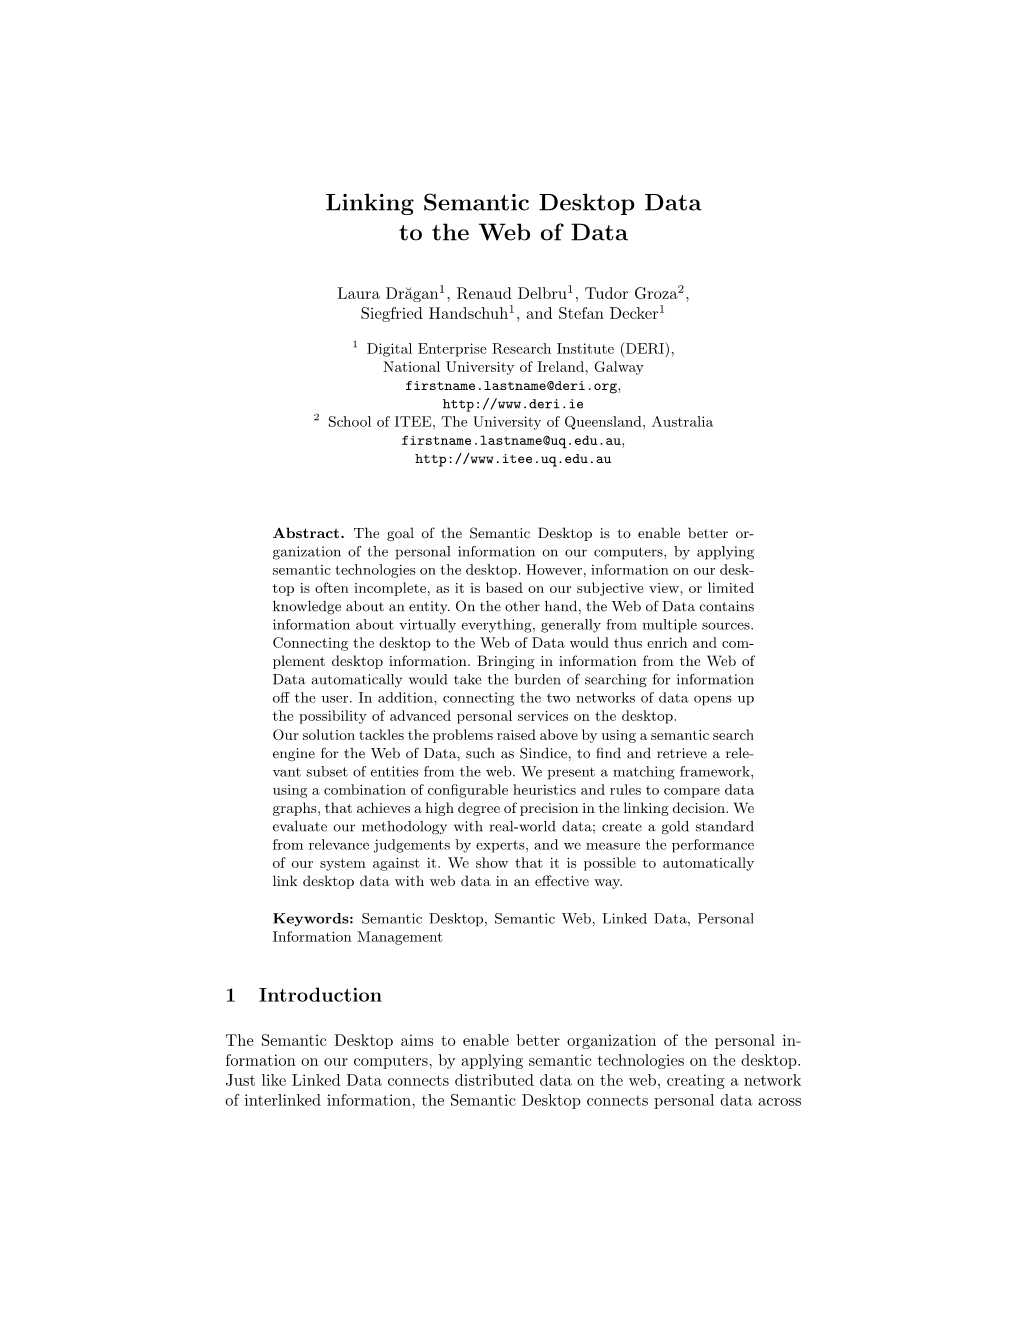 Linking Semantic Desktop Data to the Web of Data